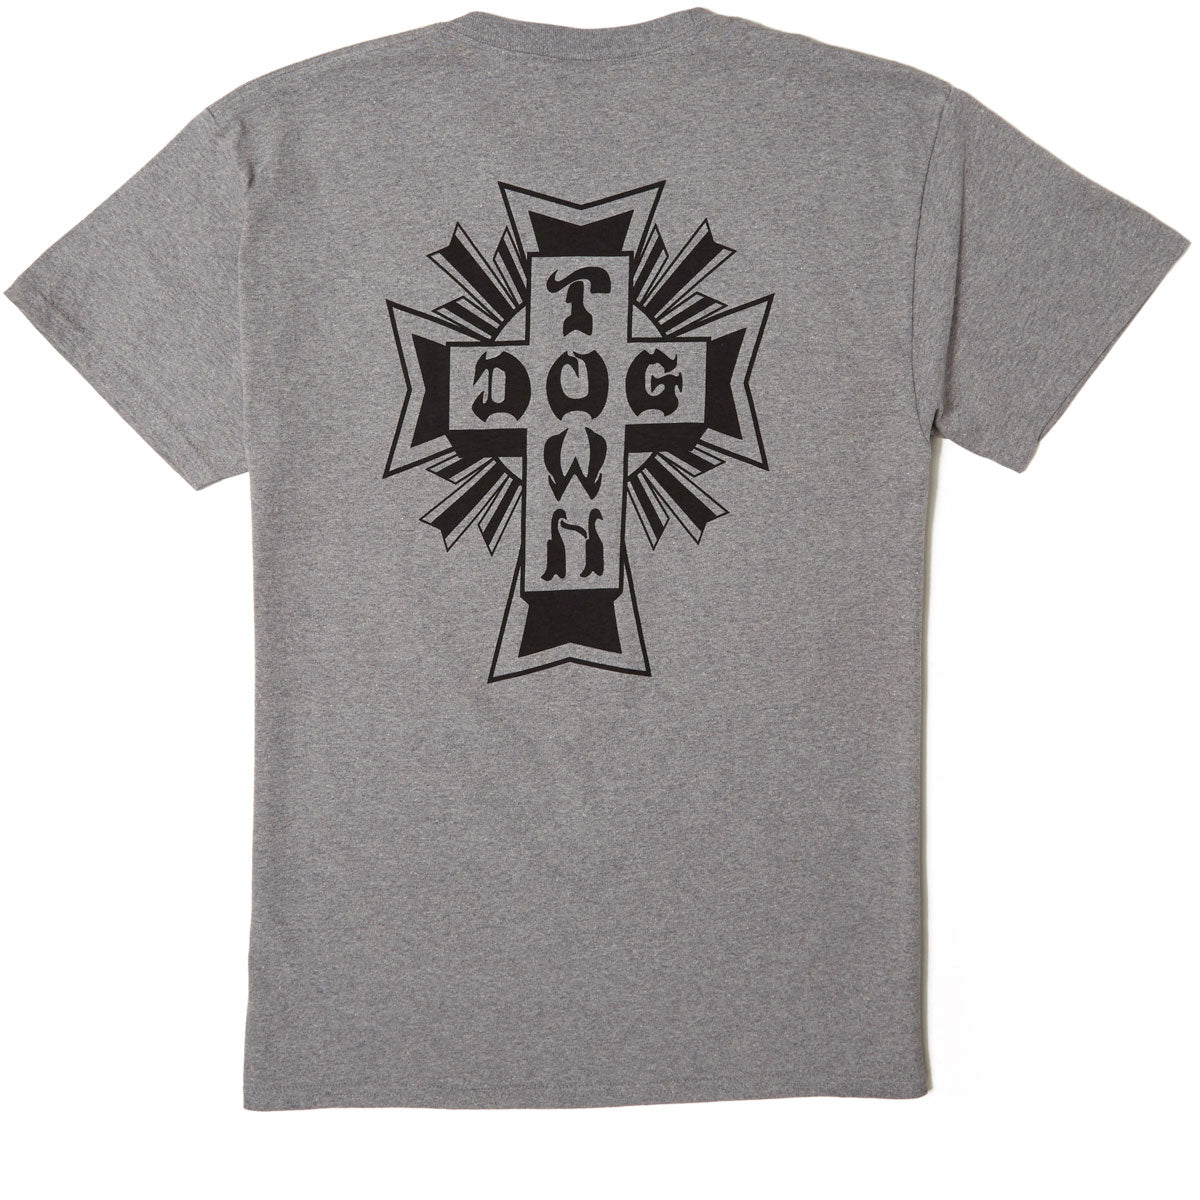 Dogtown Cross Logo T-Shirt - Oxford Grey/Black image 1